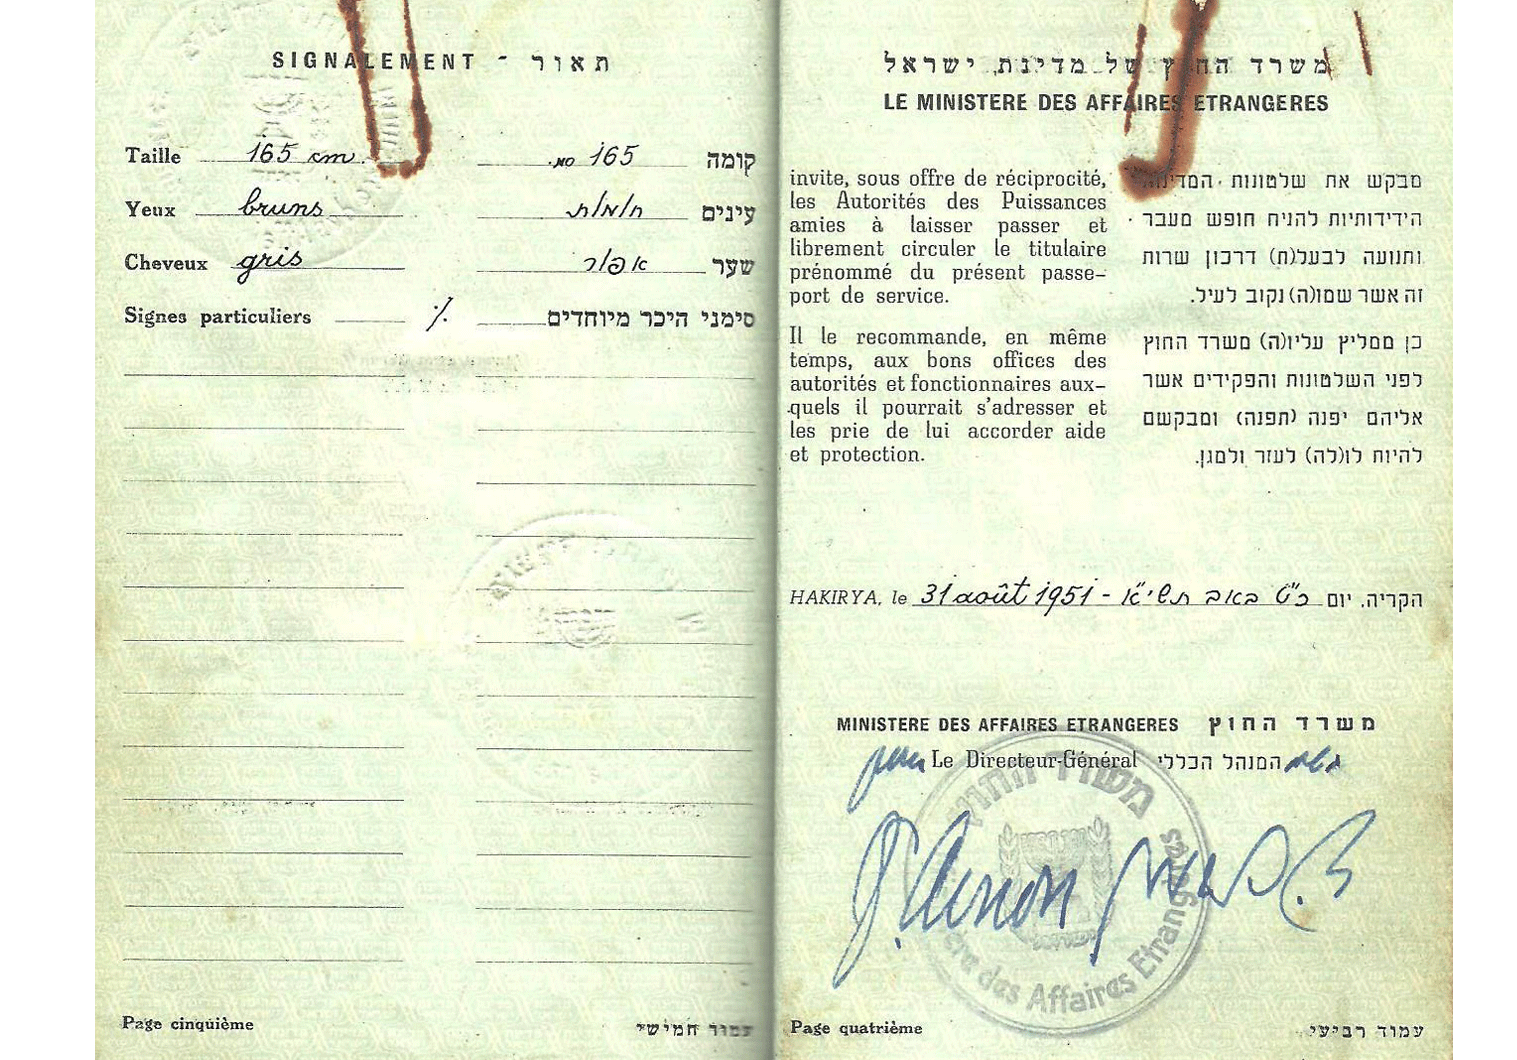 Israeli service passport from 1951